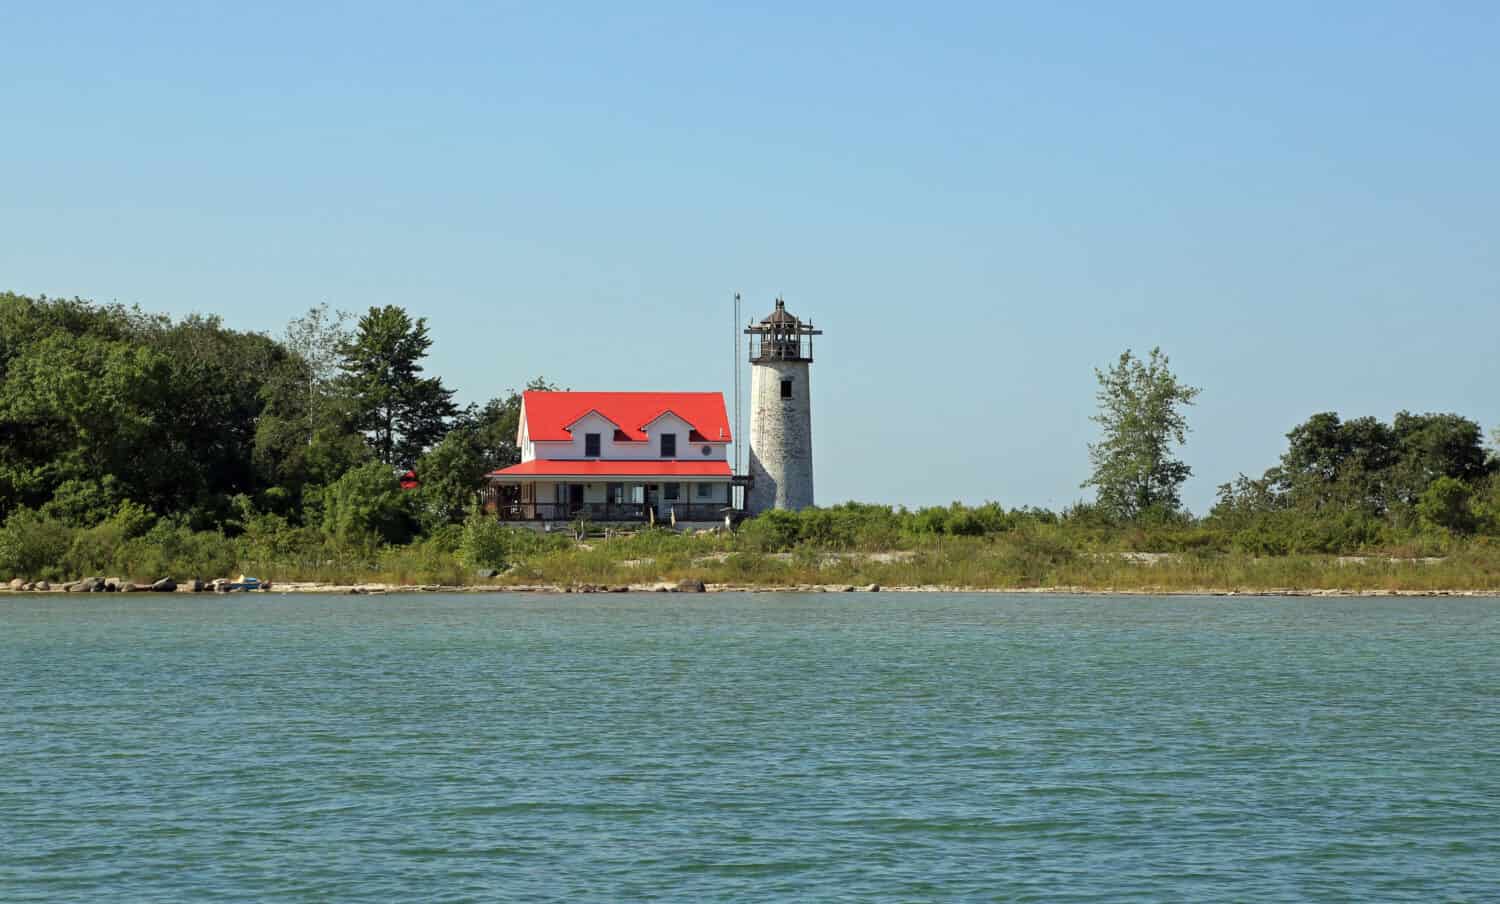 Restored Charity Island lighthouse on Saginaw Bay on Lake Huron, Michigan